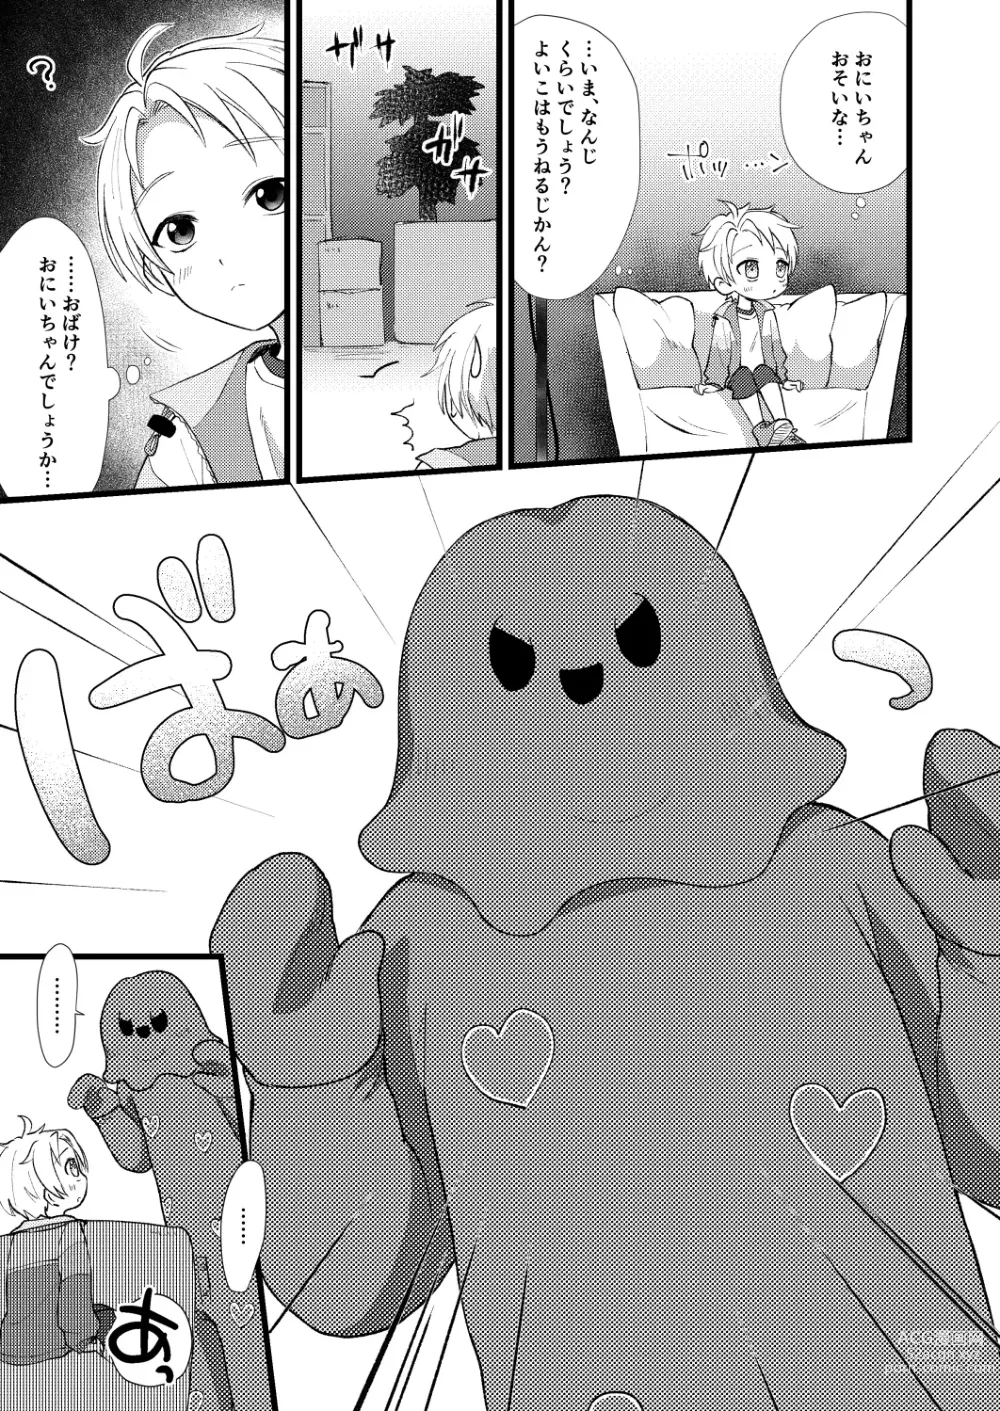 Page 6 of doujinshi Tasukete Onii-chan